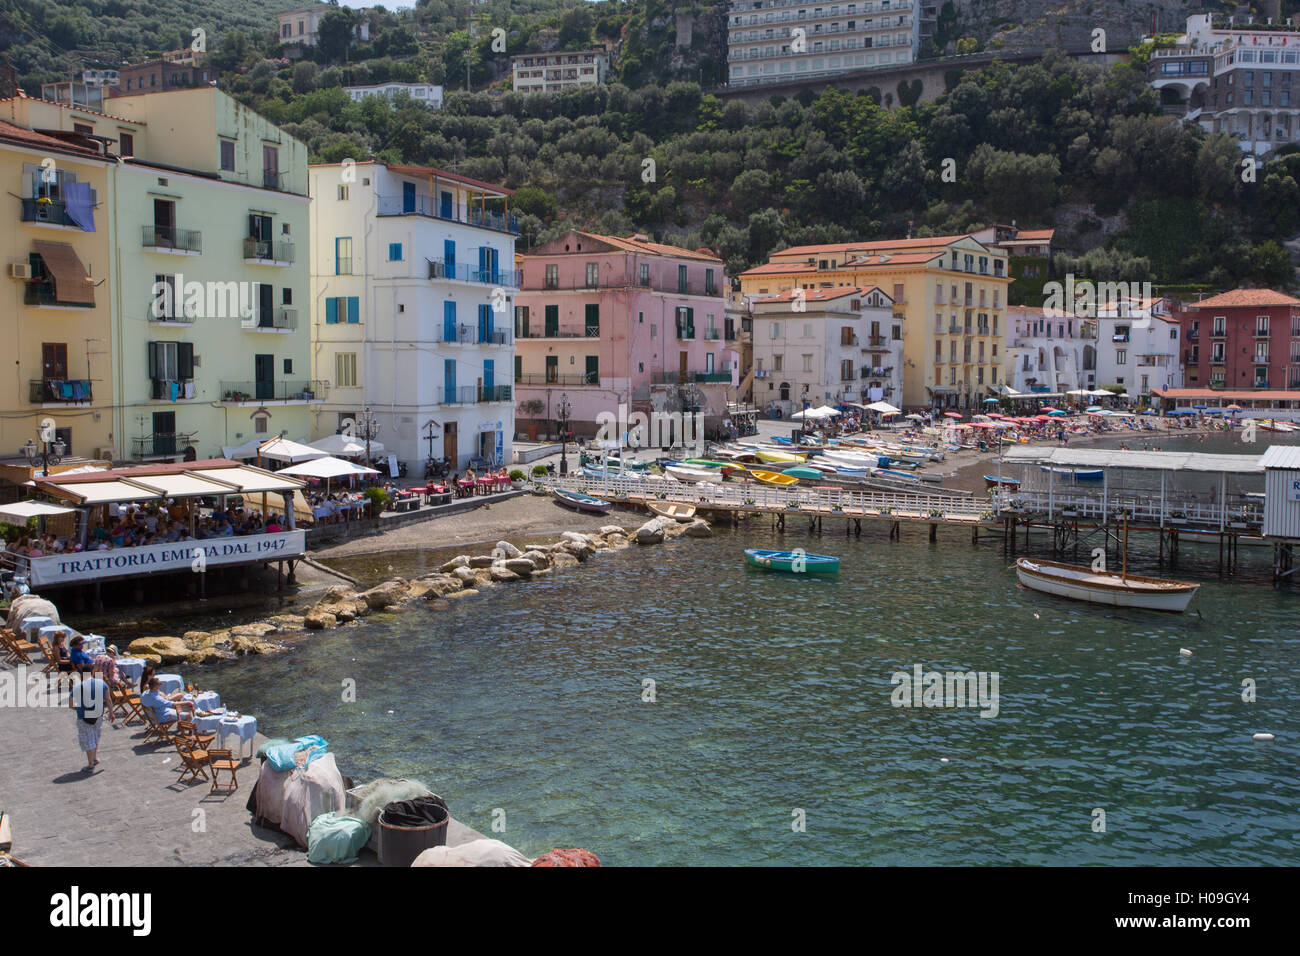 Marina Grande, Sorrento, Costiera Amalfitana (Amalfi Coast), UNESCO World Heritage Site, Campania, Italy, Europe Stock Photo